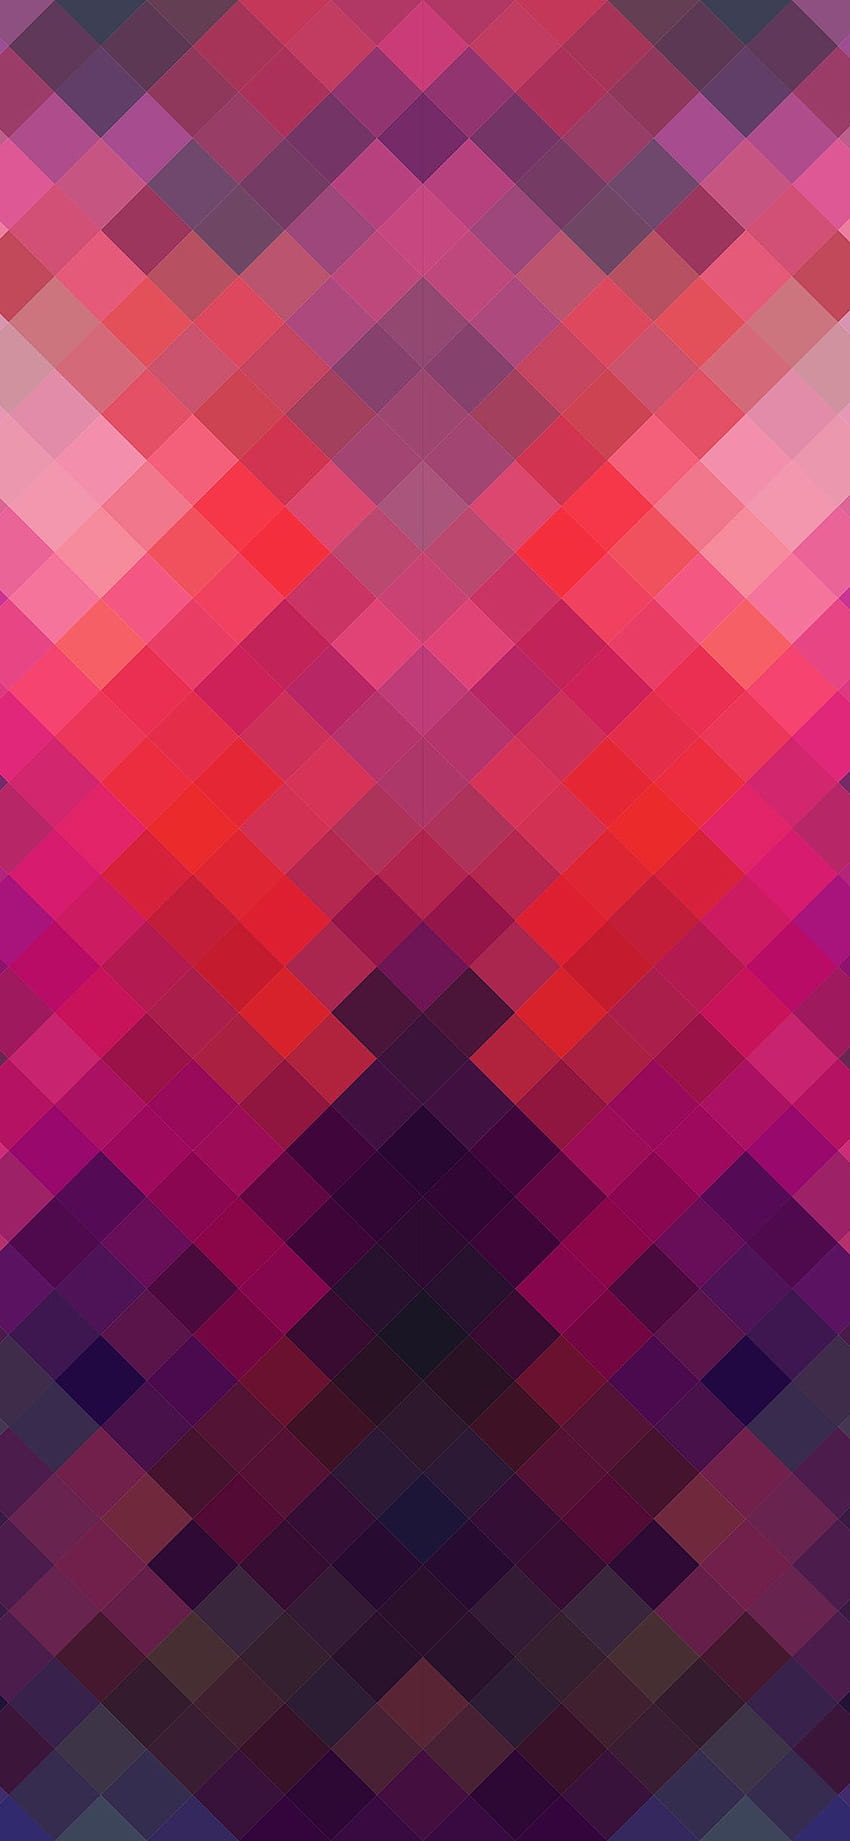 Geometric IPhone Wallpaper 77 images